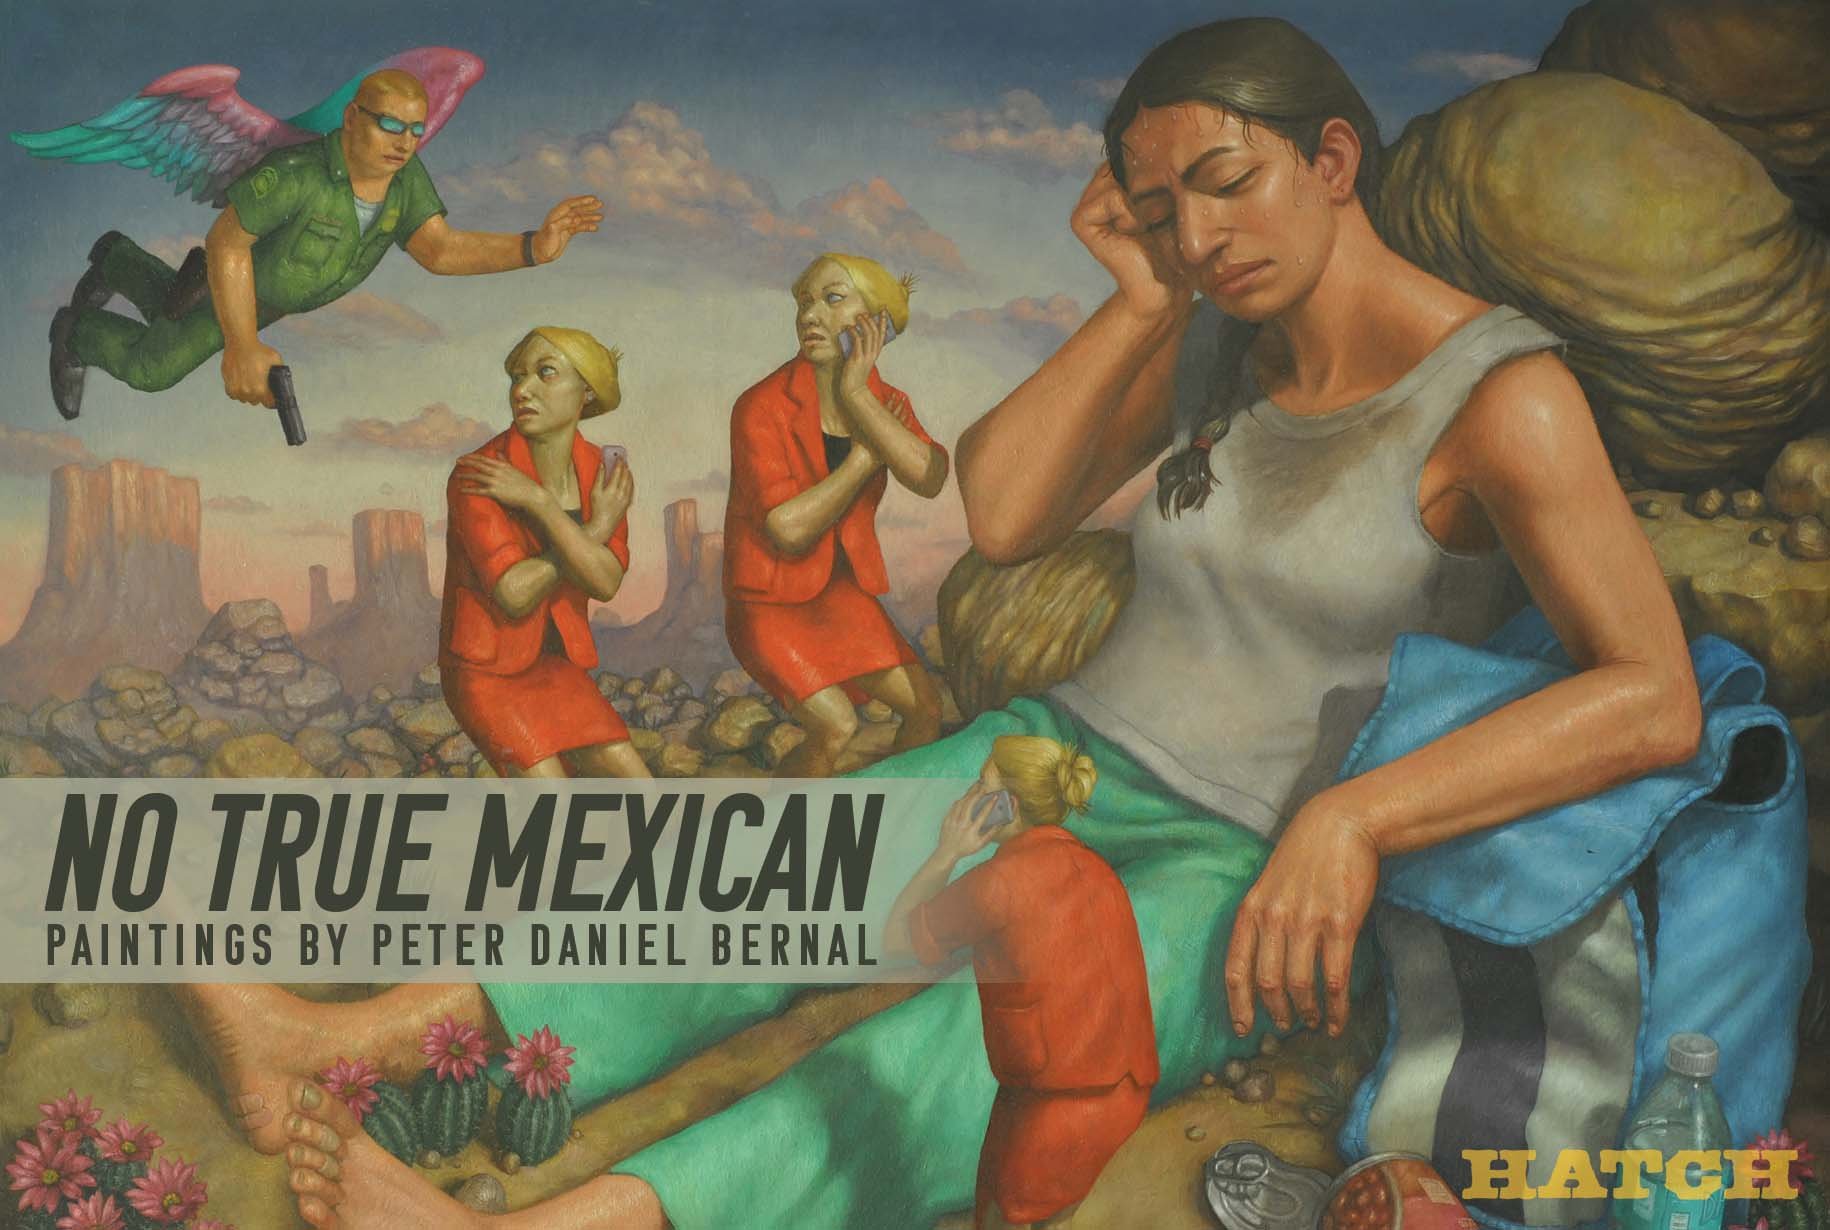 No True Mexican: Paintings by Peter Daniel Bernal